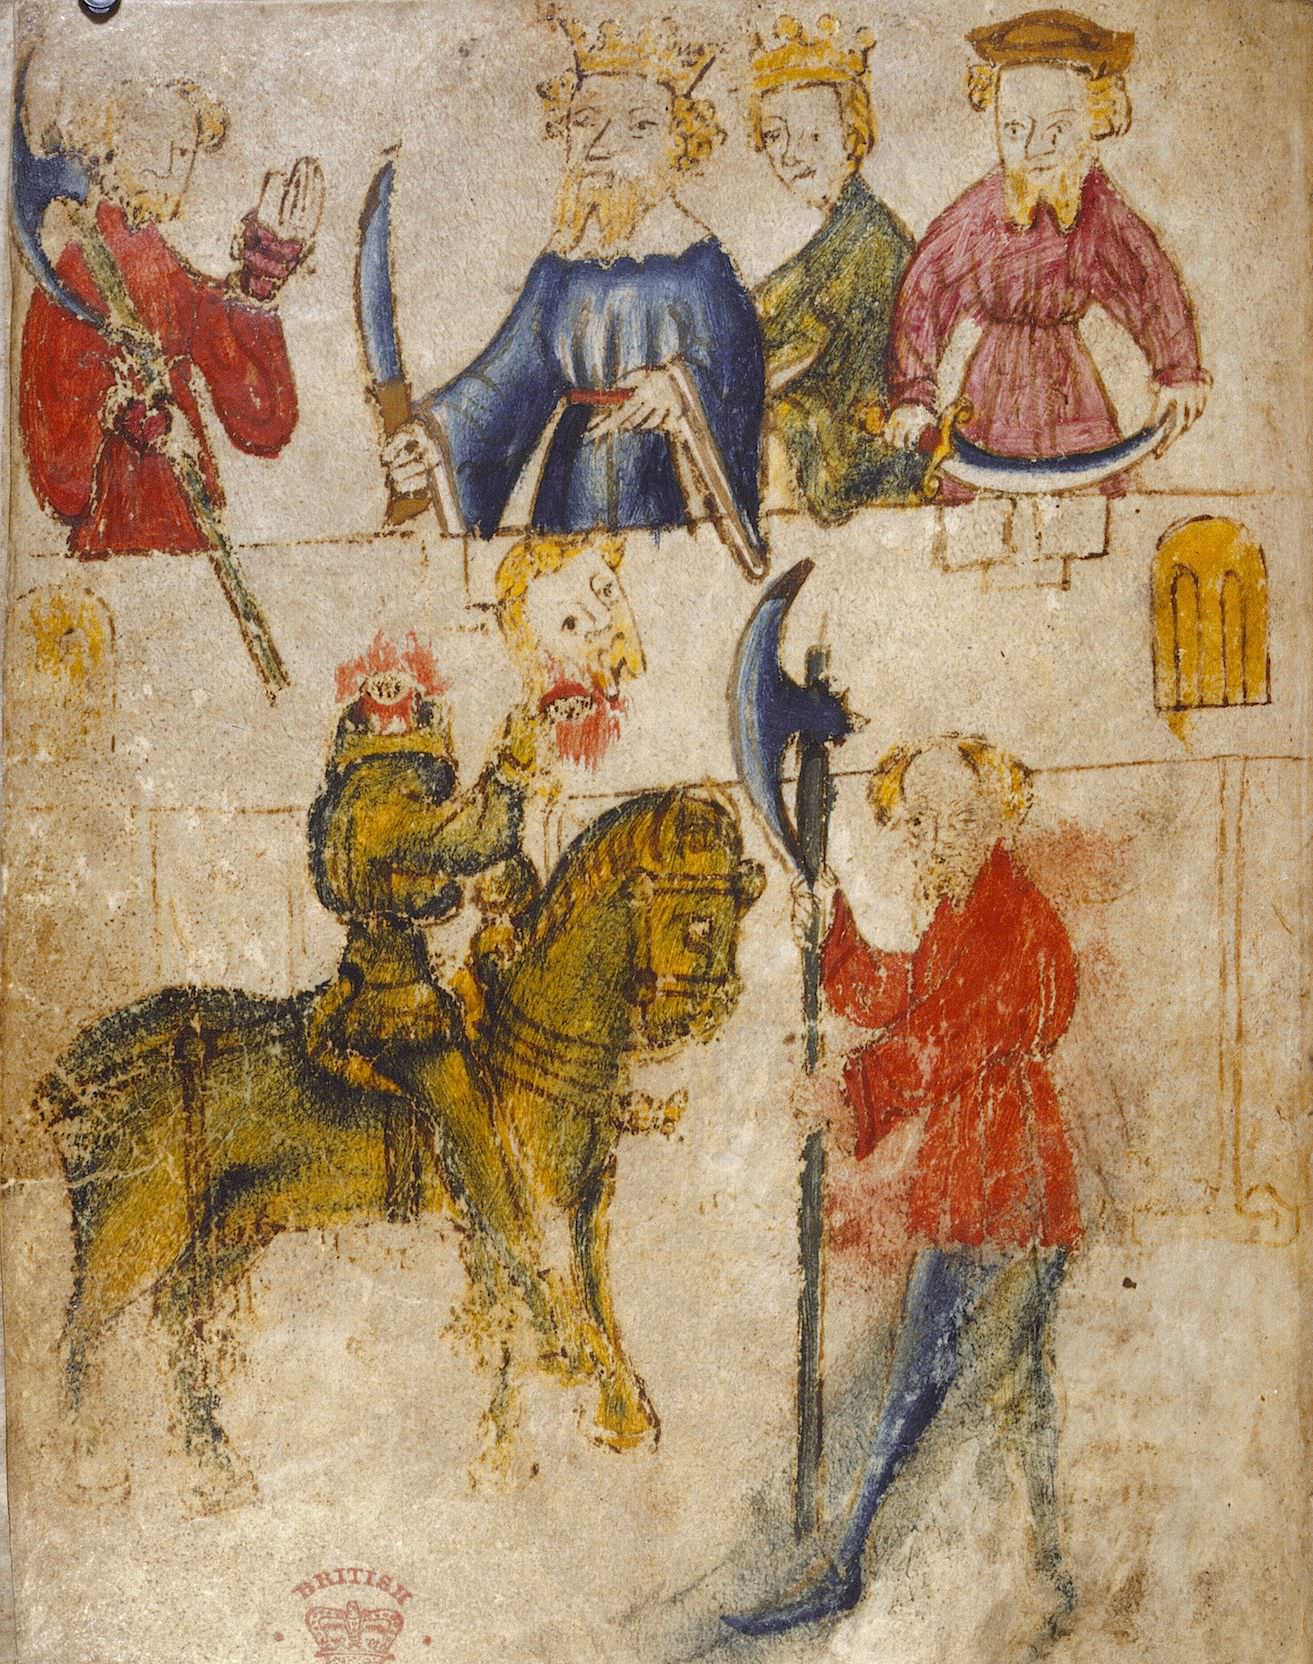 Sir Gawain and the Green Knight Response to Literature